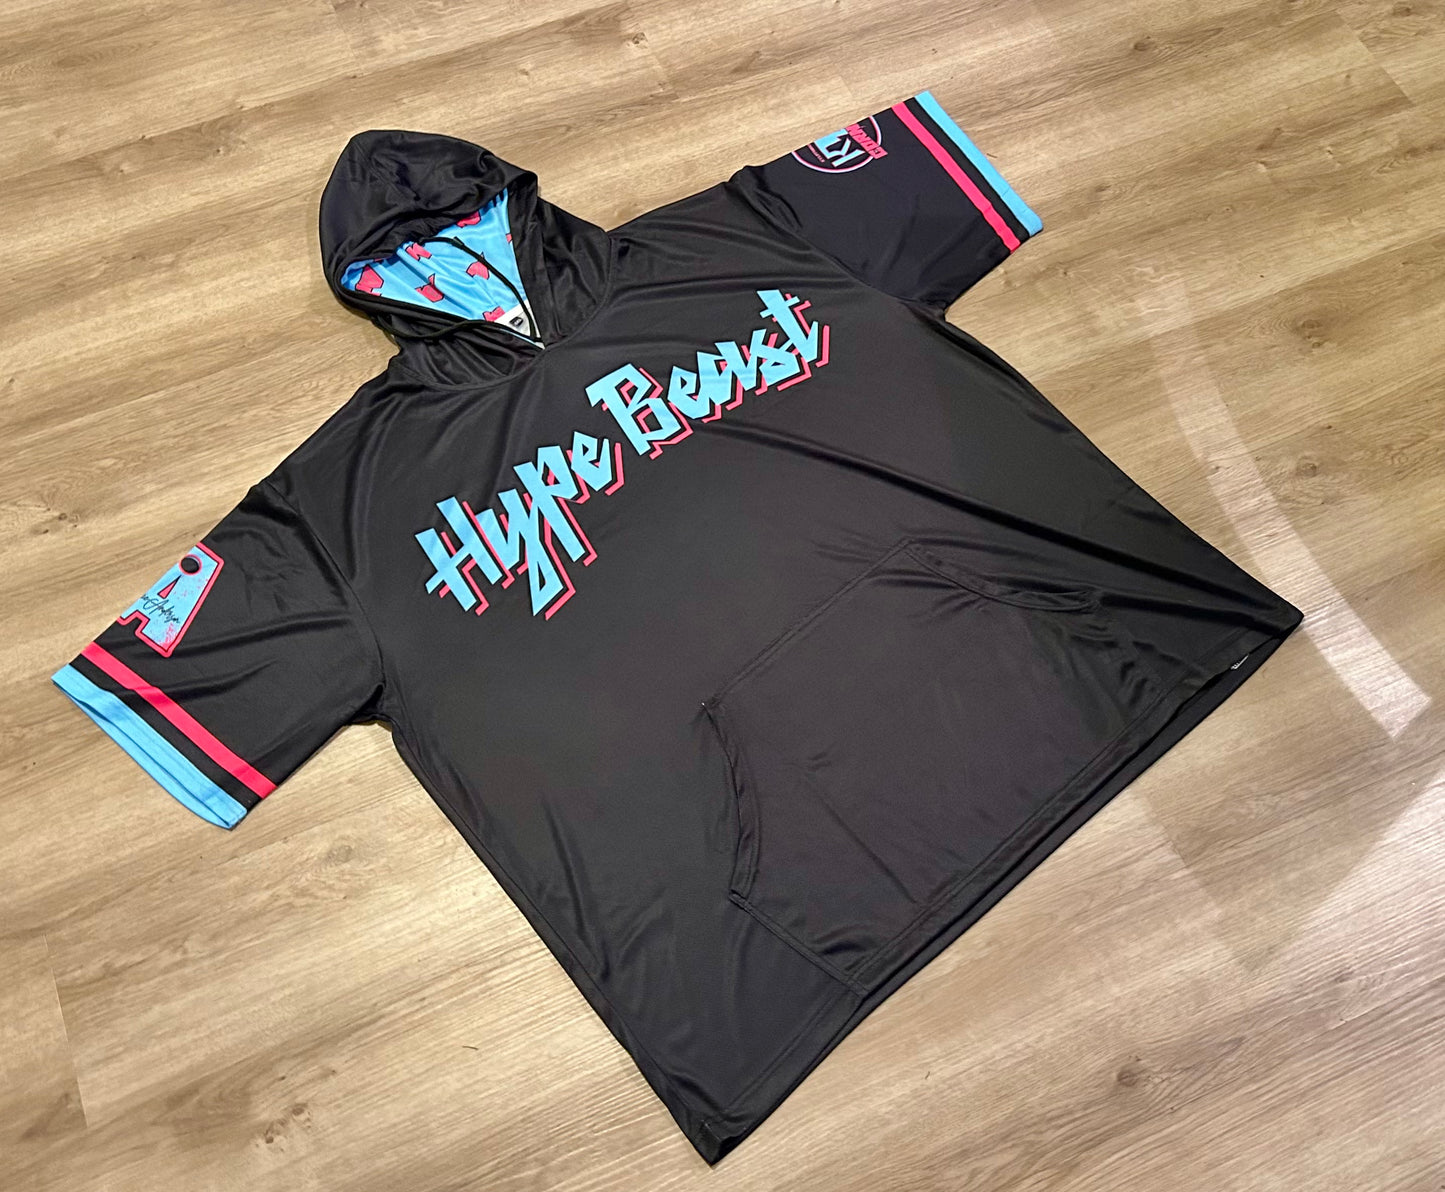 Hype Beast Short sleeve hoodie/jersey – Hype beast cornhole